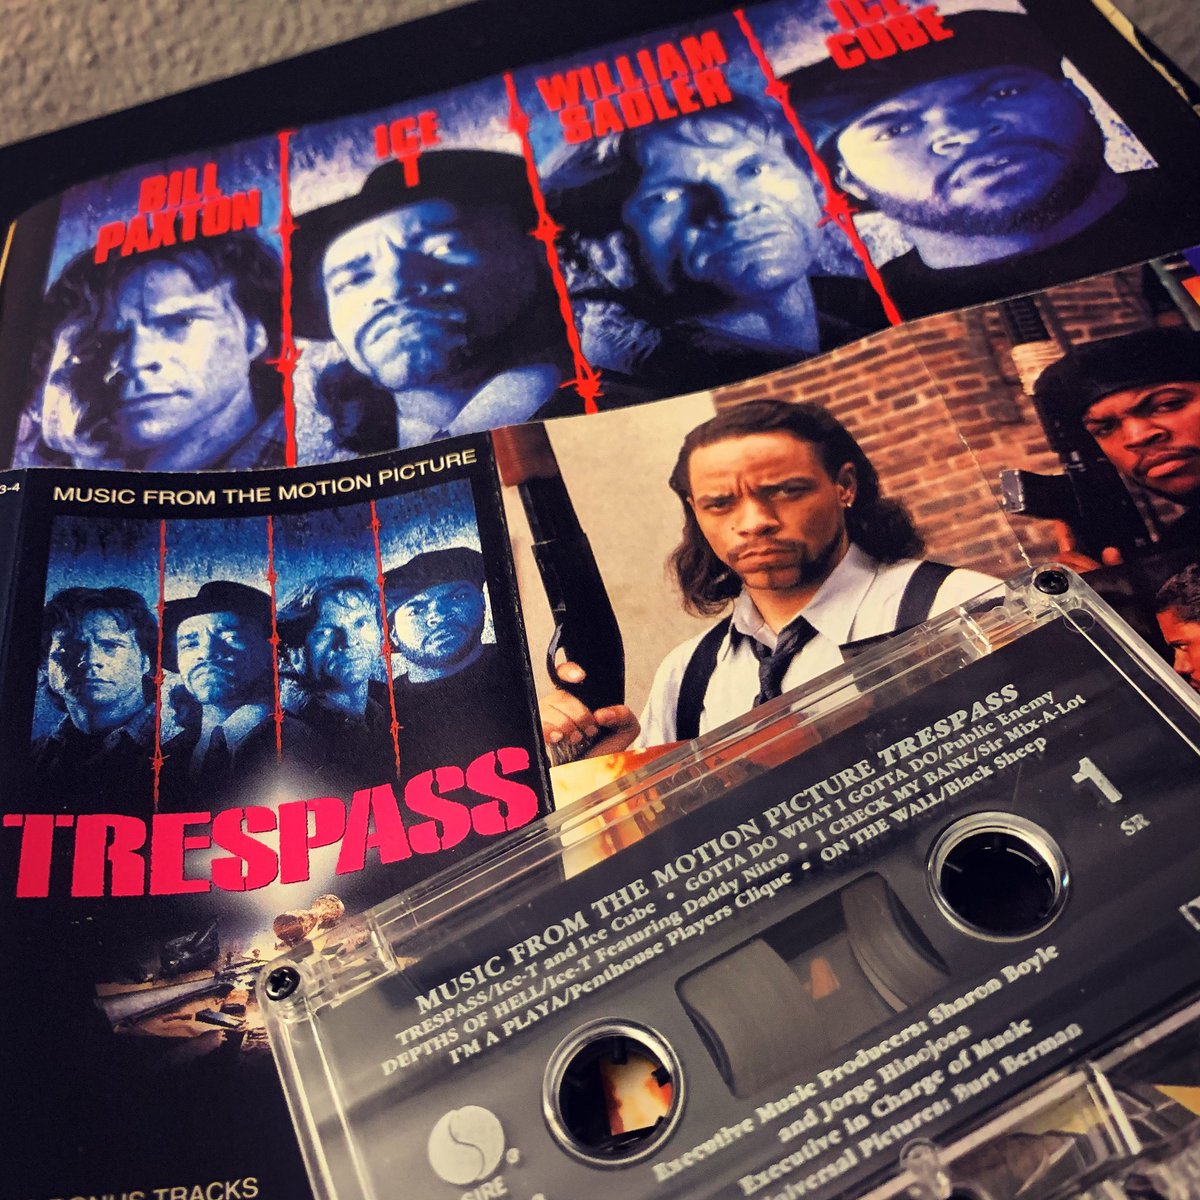 Music From The Motion Picture TRESPASS
@FINALLEVEL @icecube @PublicEnemyFTP @therealmix @OGPLAYAHAMM @DresBlacksheep @gangstarr @LordFinesseDITC @donalddbronx @TherealDubWC 
#ripmooseman #ripguru #ripcrazytoones #ripbillpaxton #classic #hiphop #trespass #soundtrack #hiphopgods